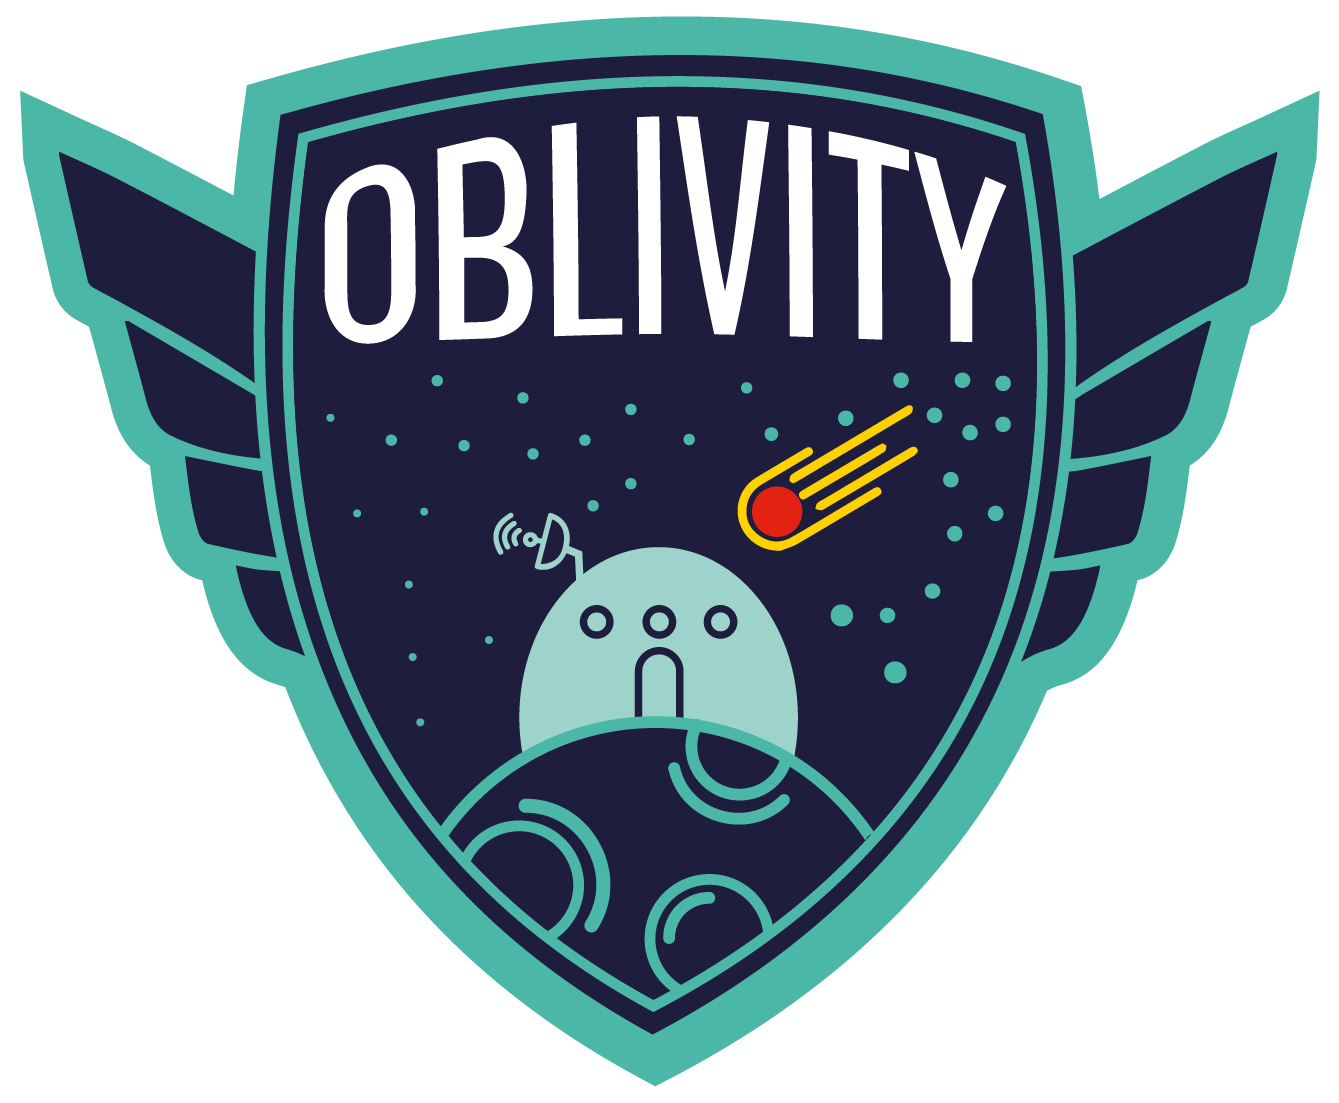 Oblivity logo